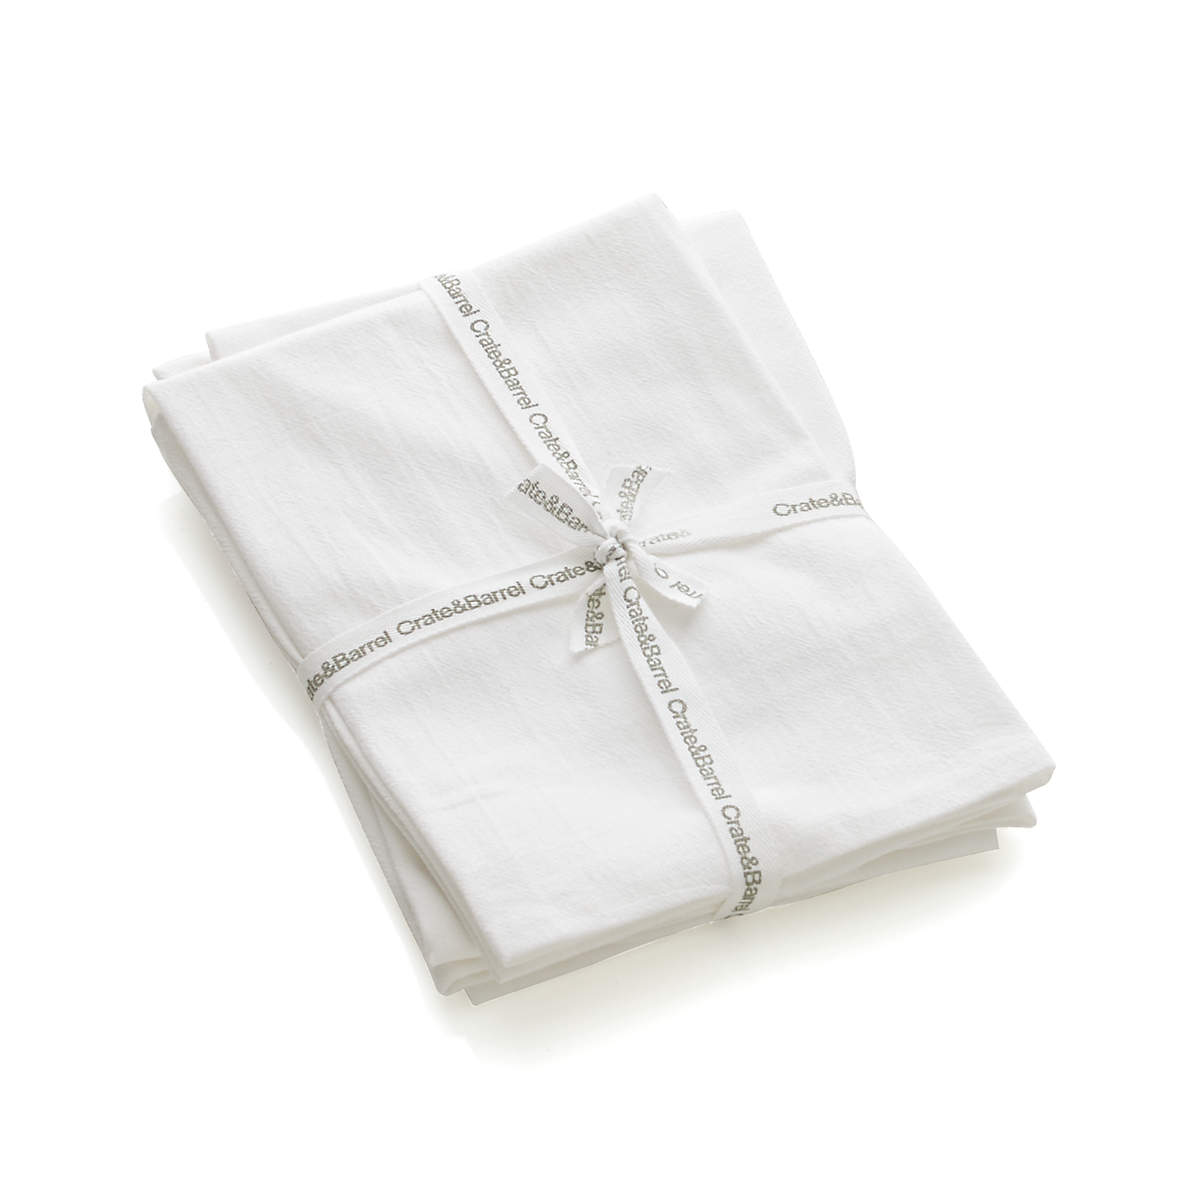 Tag Flour Sack Dishtowels Set of 5 - White